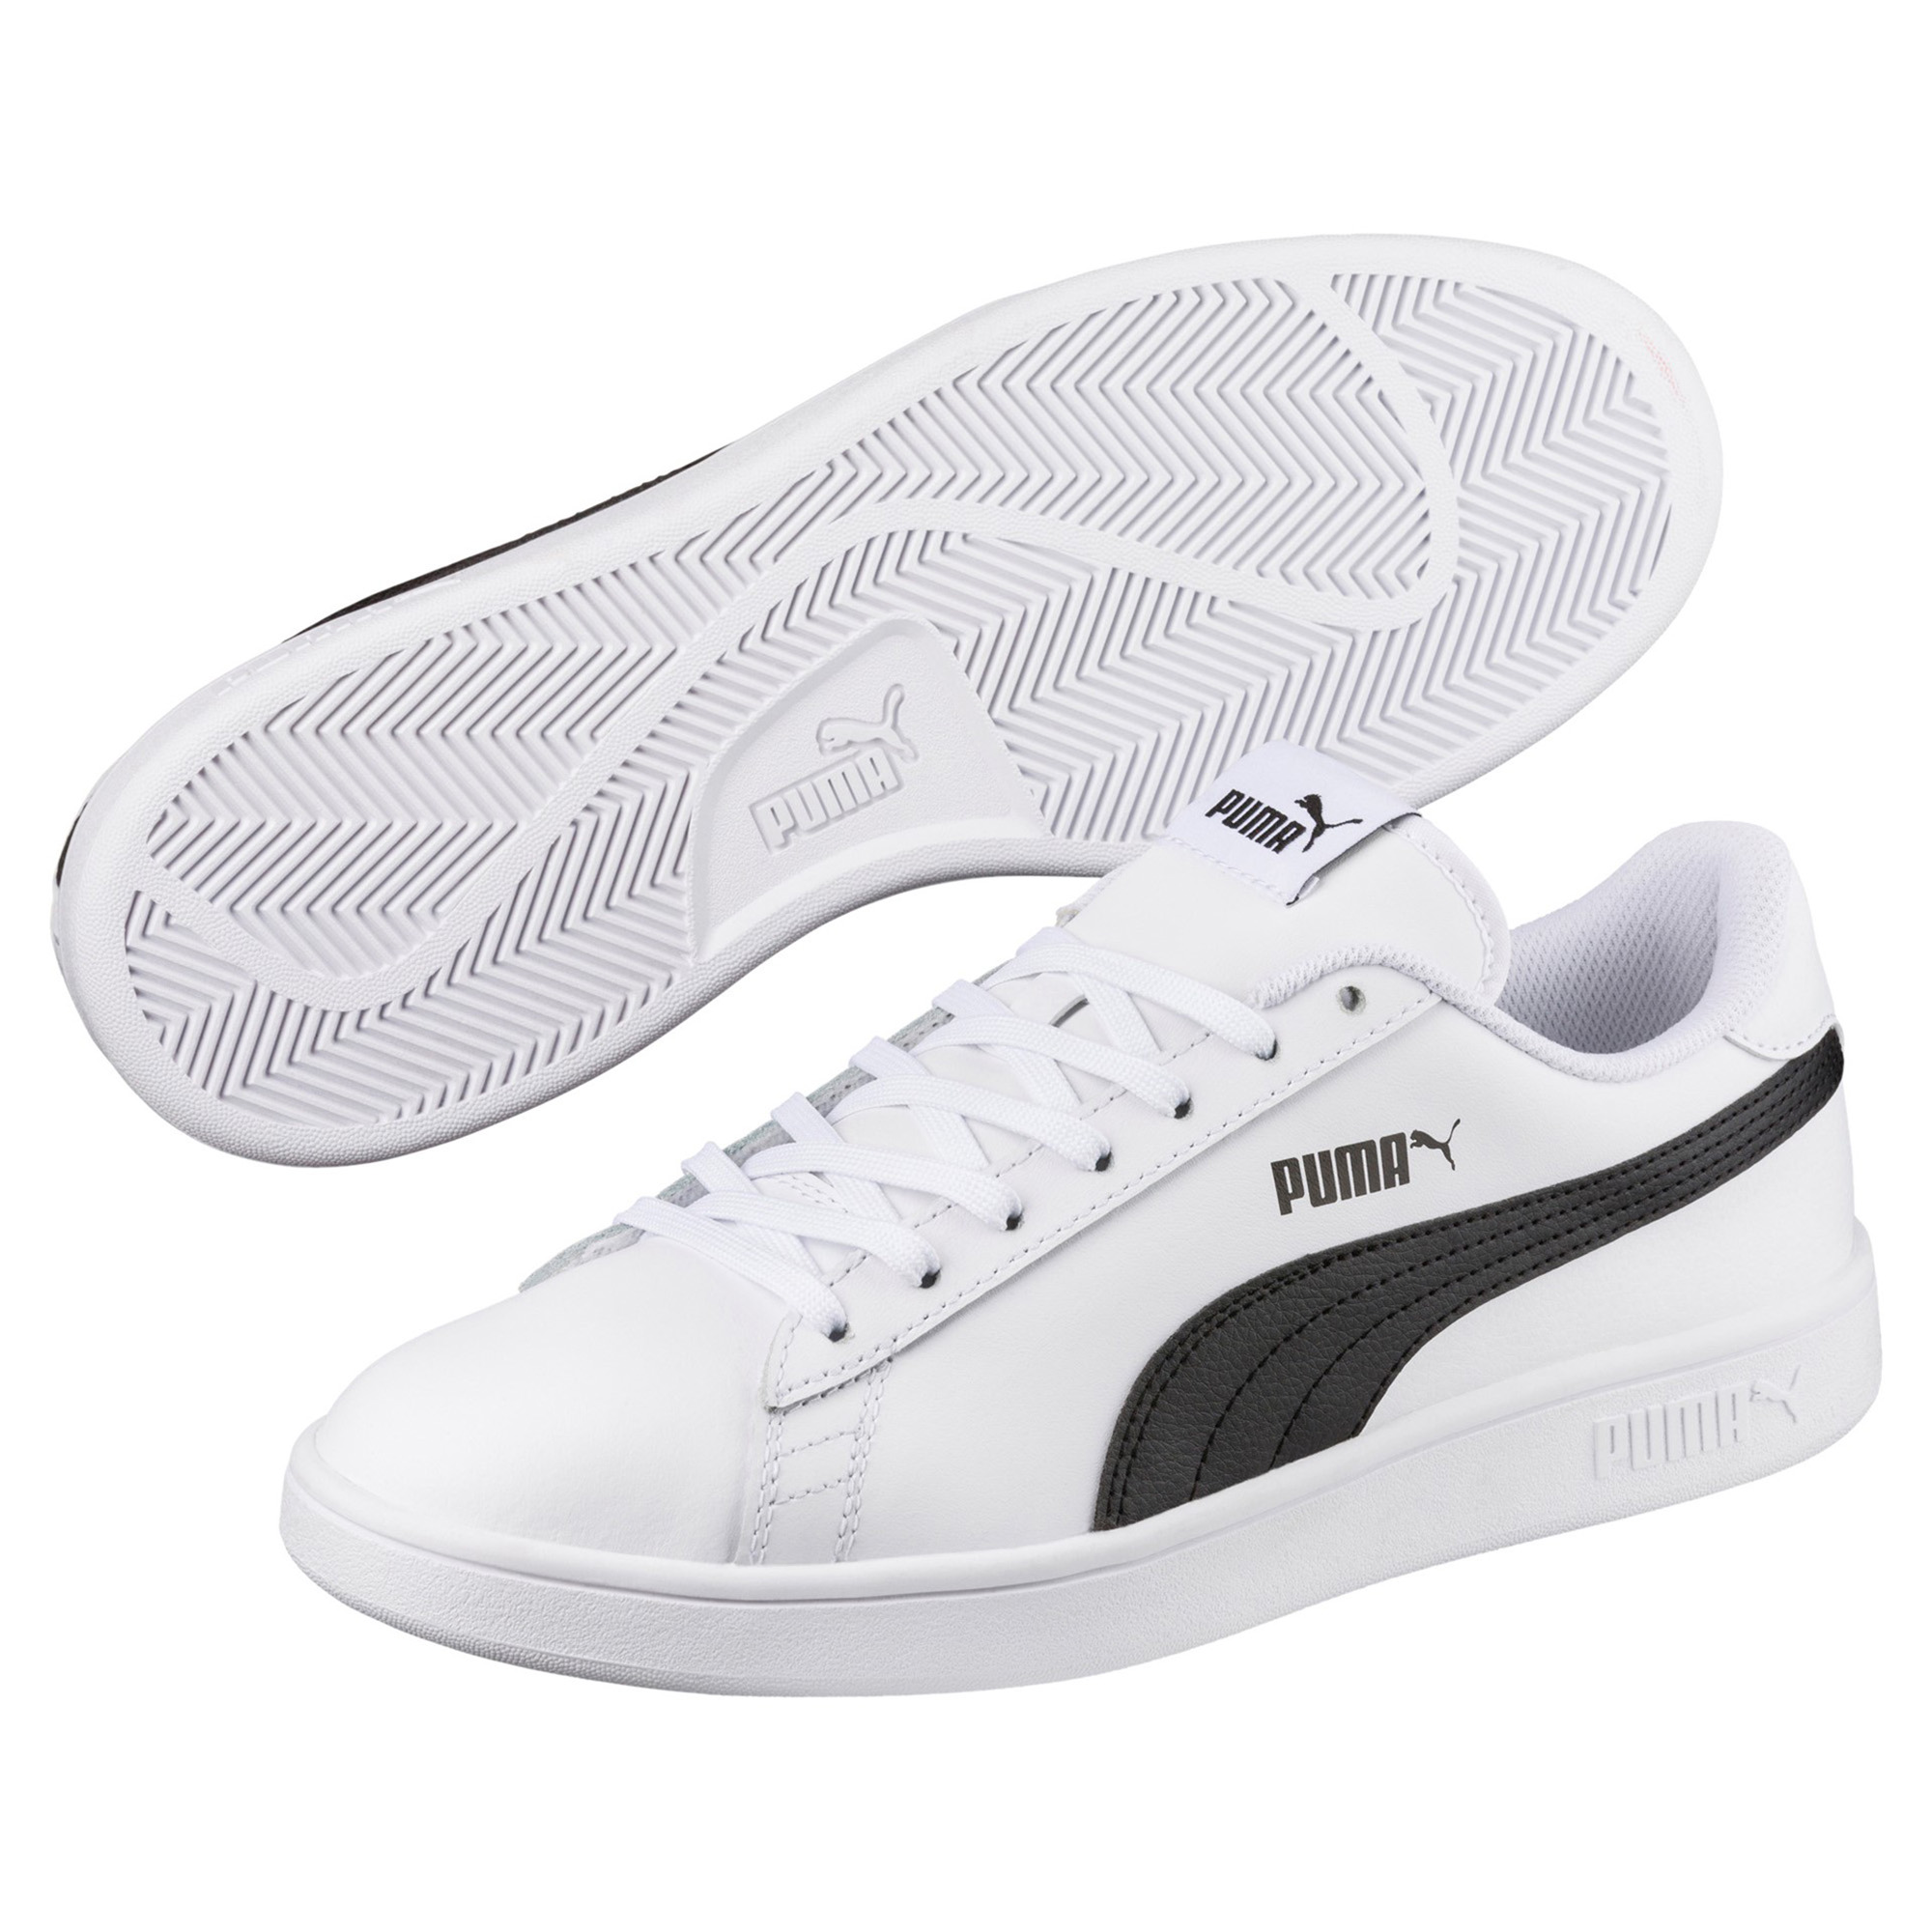 Puma Smash v2 L, Unisex-Erwachsene Sneakers, Weiß (Puma White-Puma Black), 37.5 EU (4.5 UK)